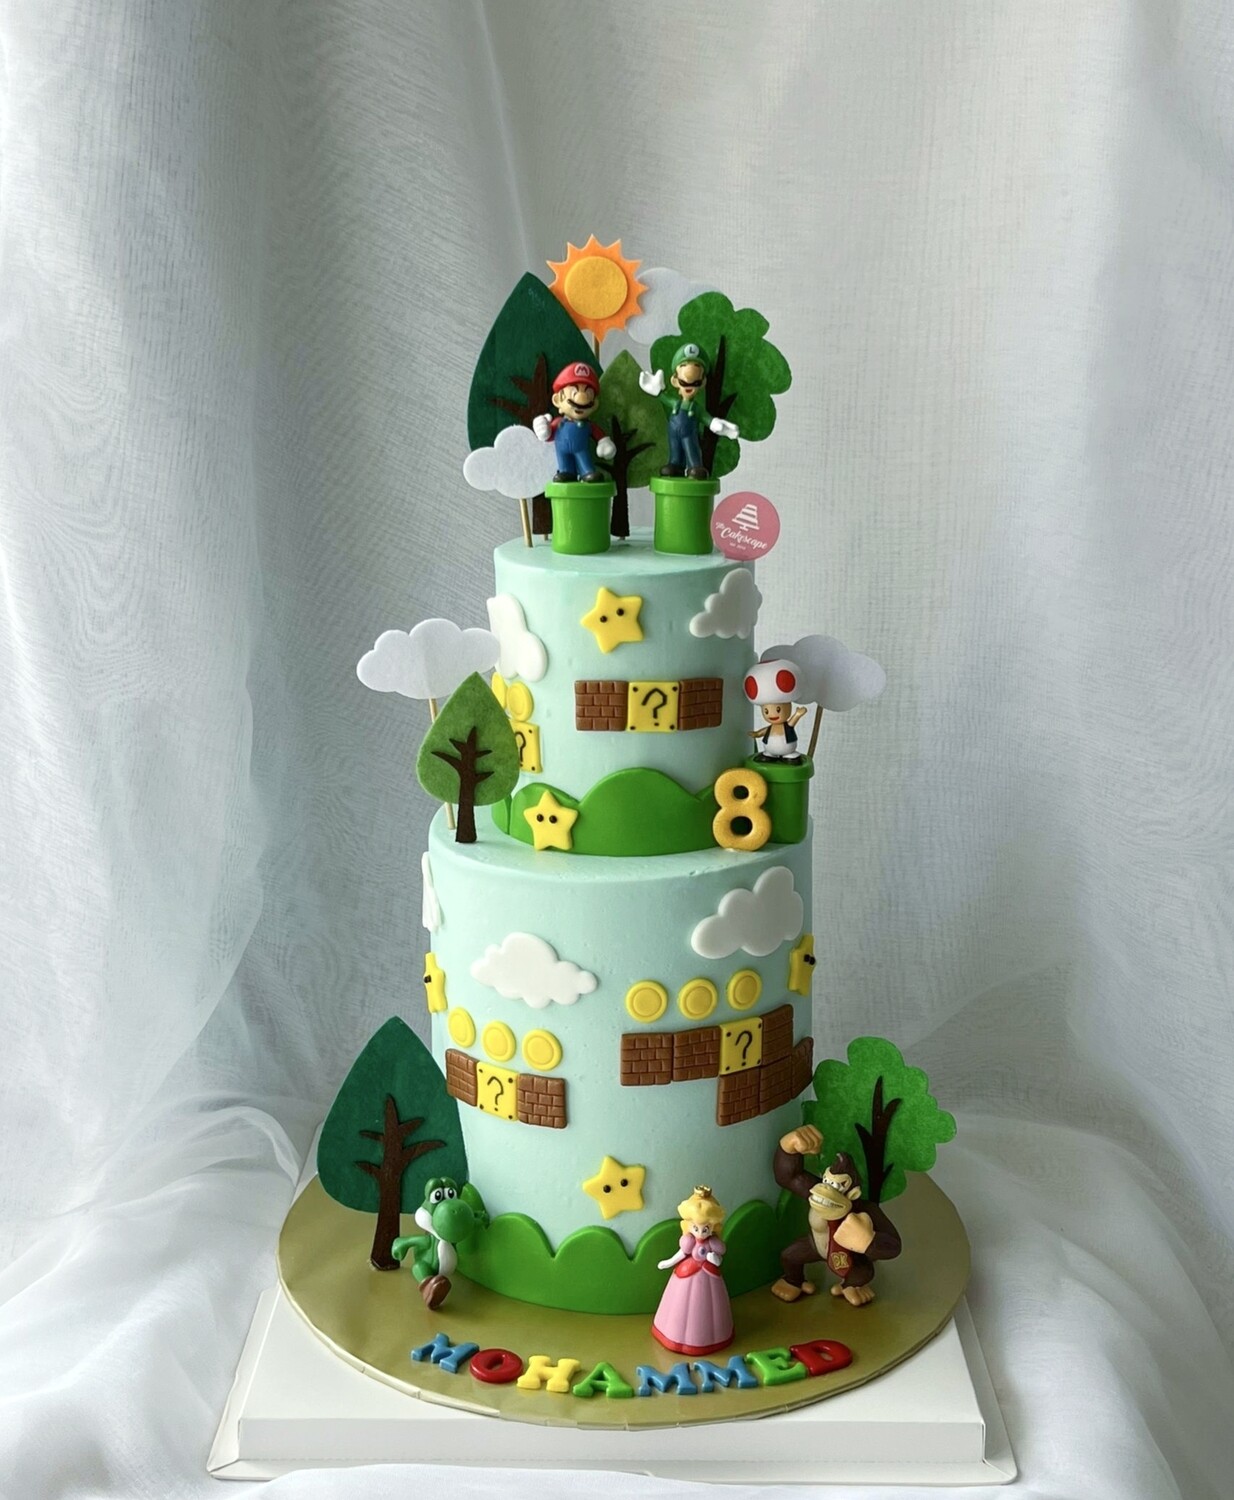 Super Mario Cake 2 in 2tier